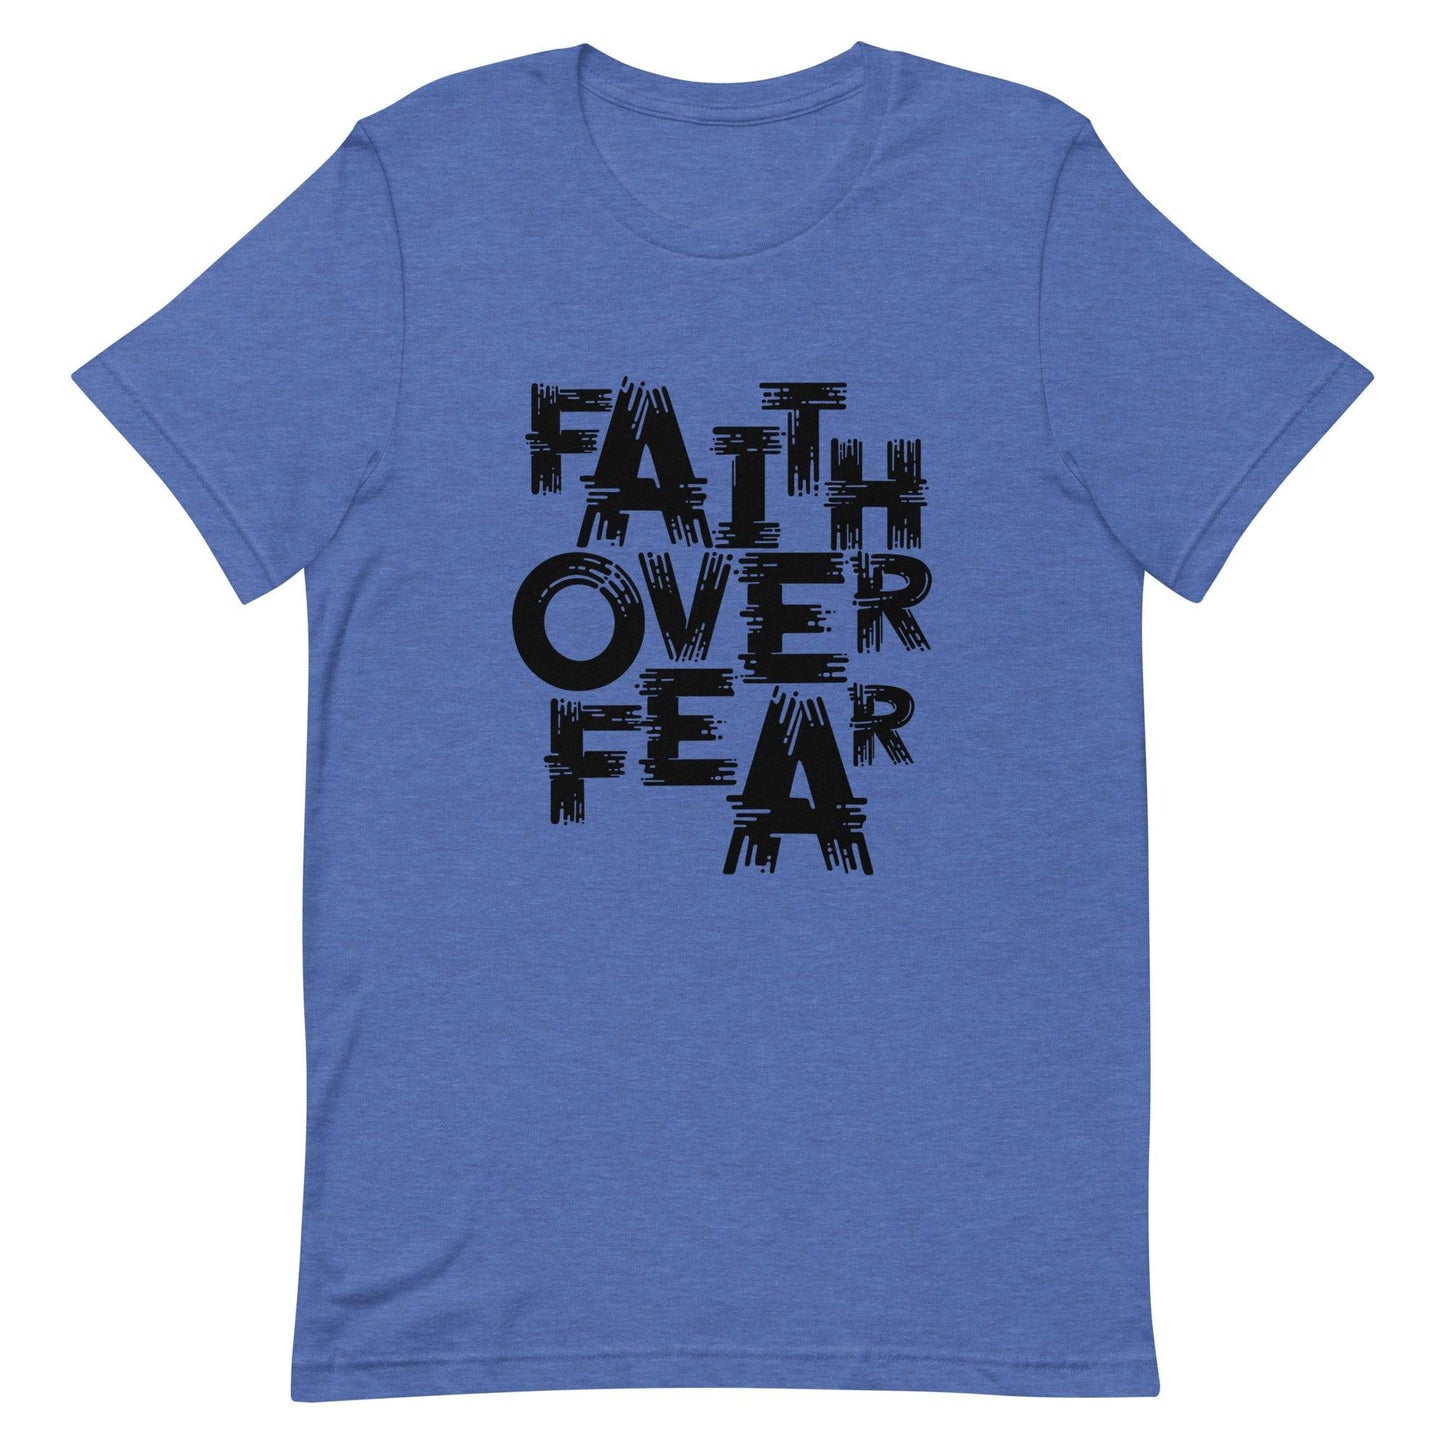 Diondre Borel "Faith Over Fear" t-shirt - Fan Arch